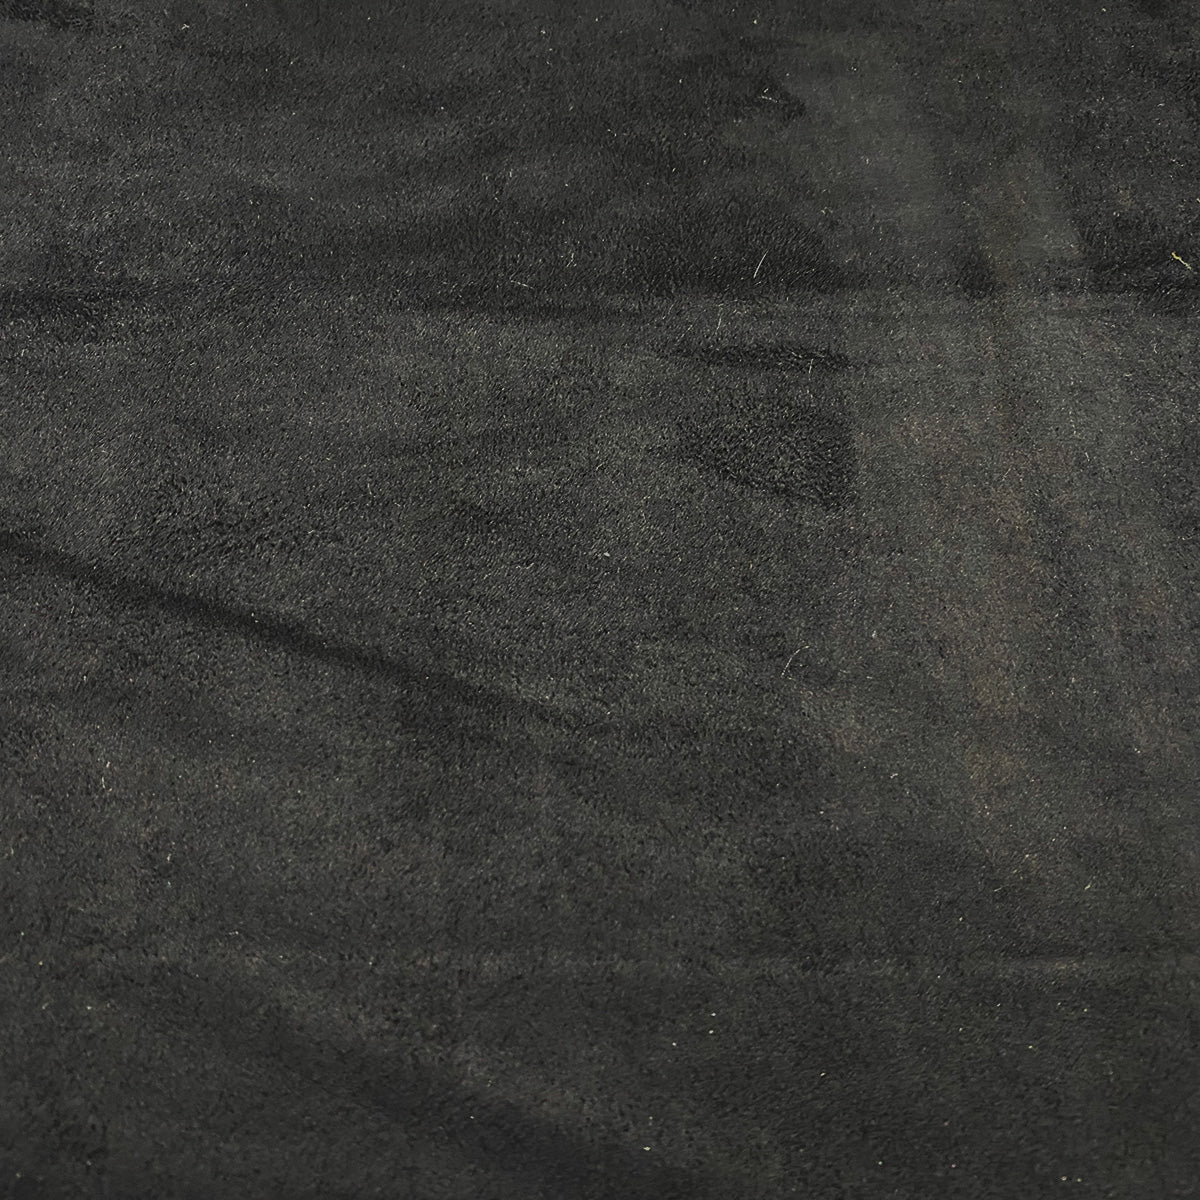 Microfiber Suede Wholesale Fabric in Black – Urquid Linen